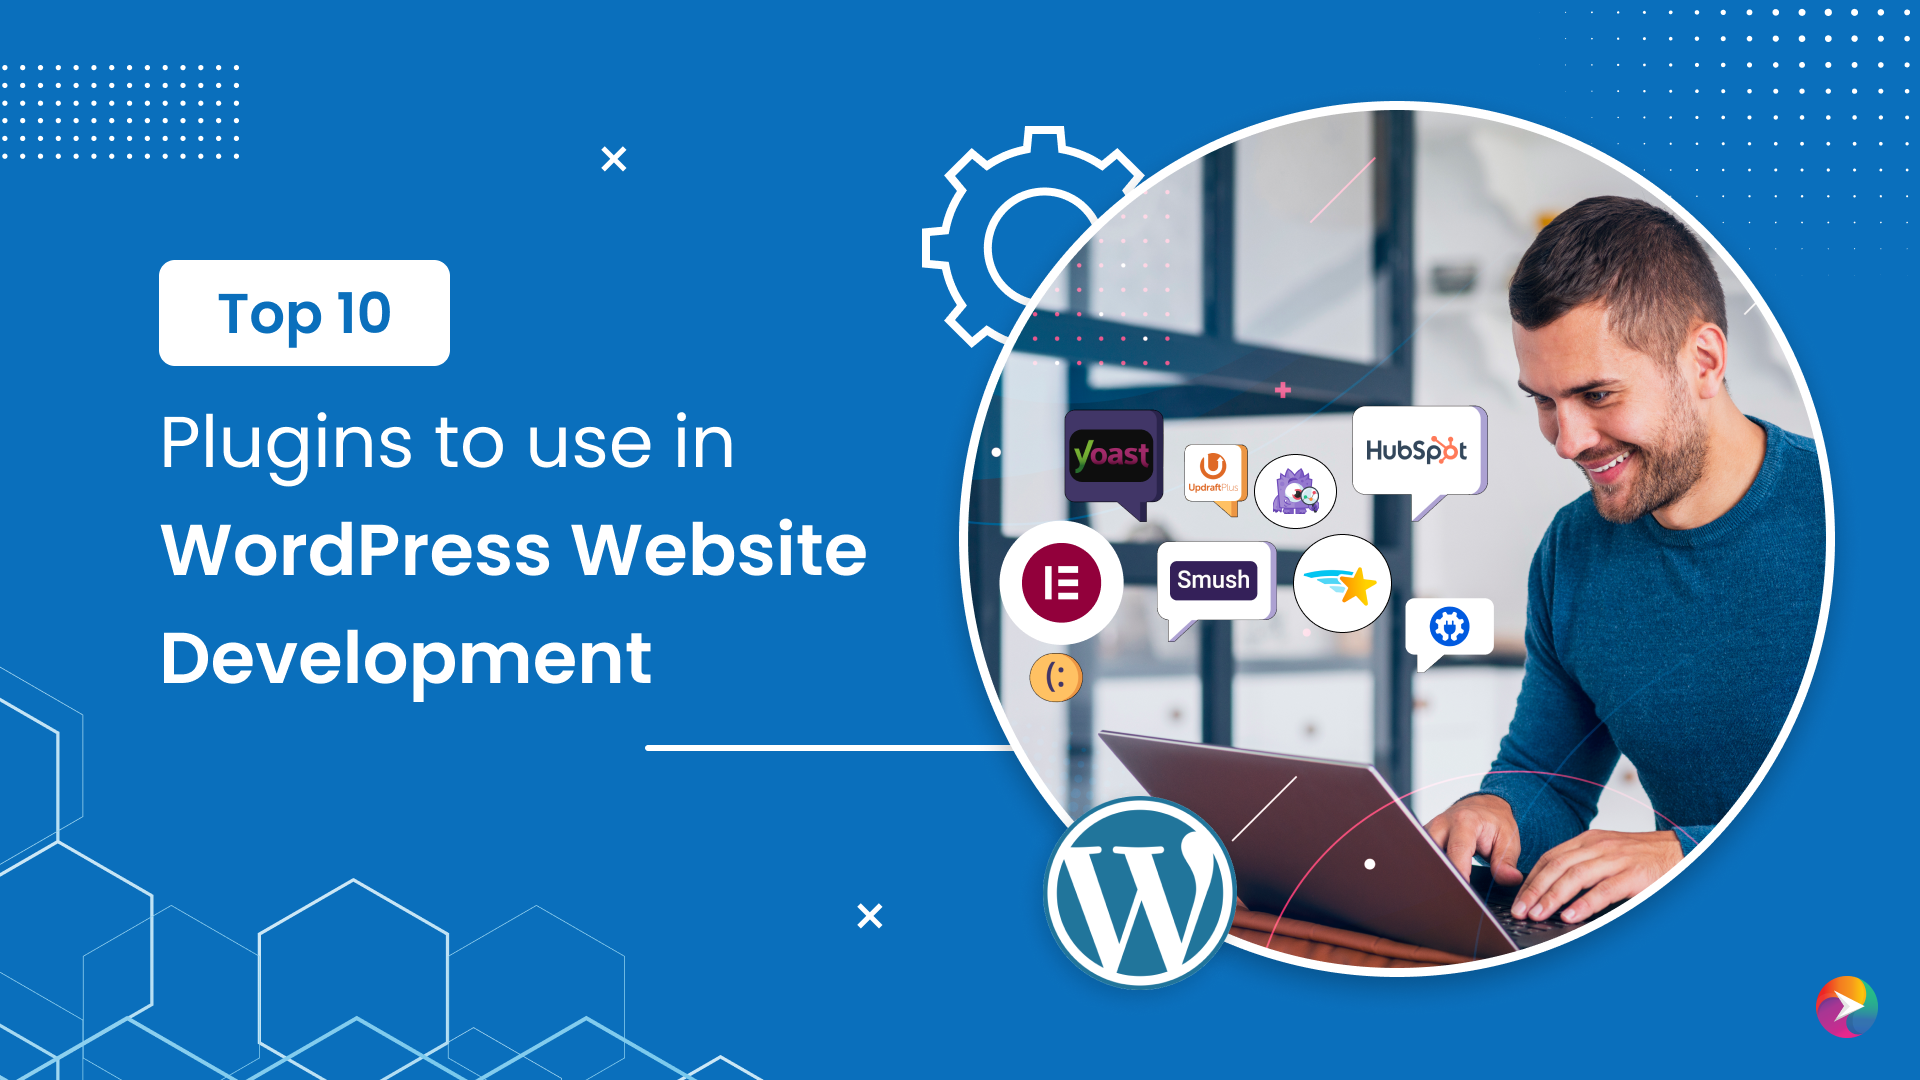 Top 10 Plugins to use in WordPress Website Development